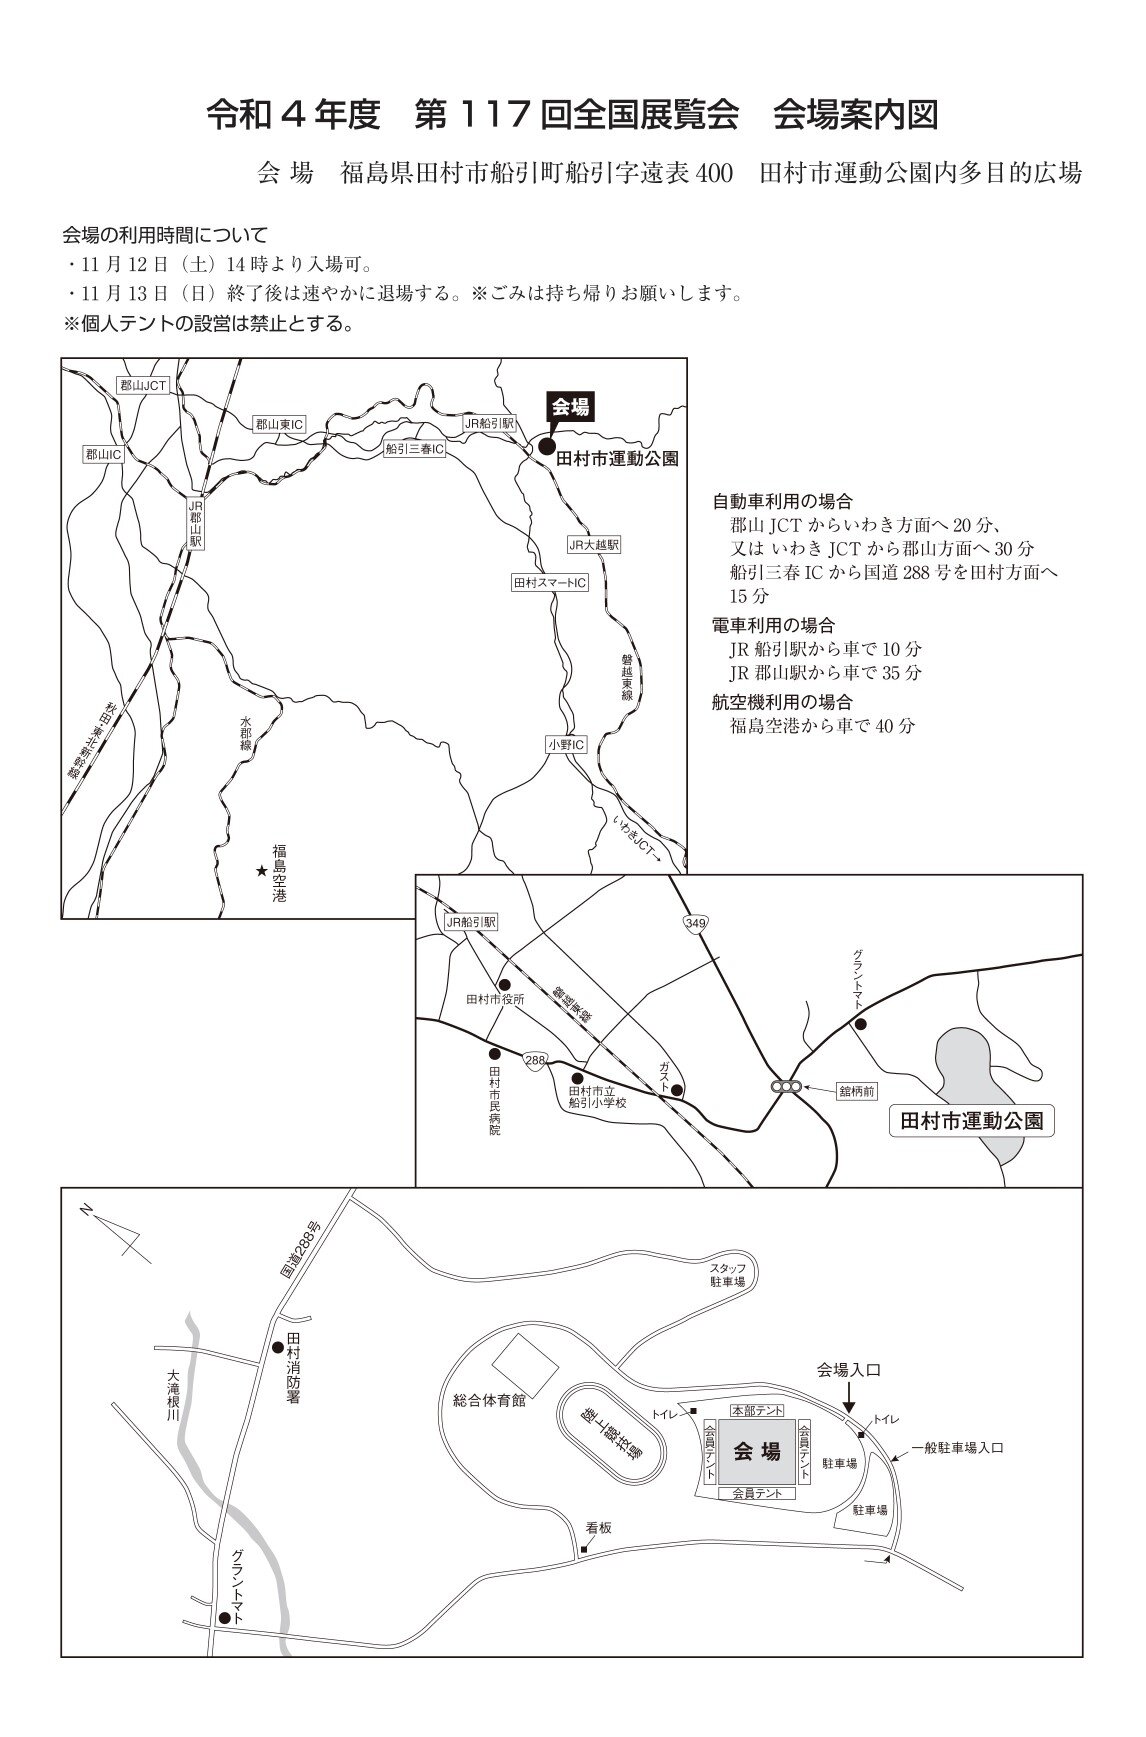 zenkoku_map.jpg